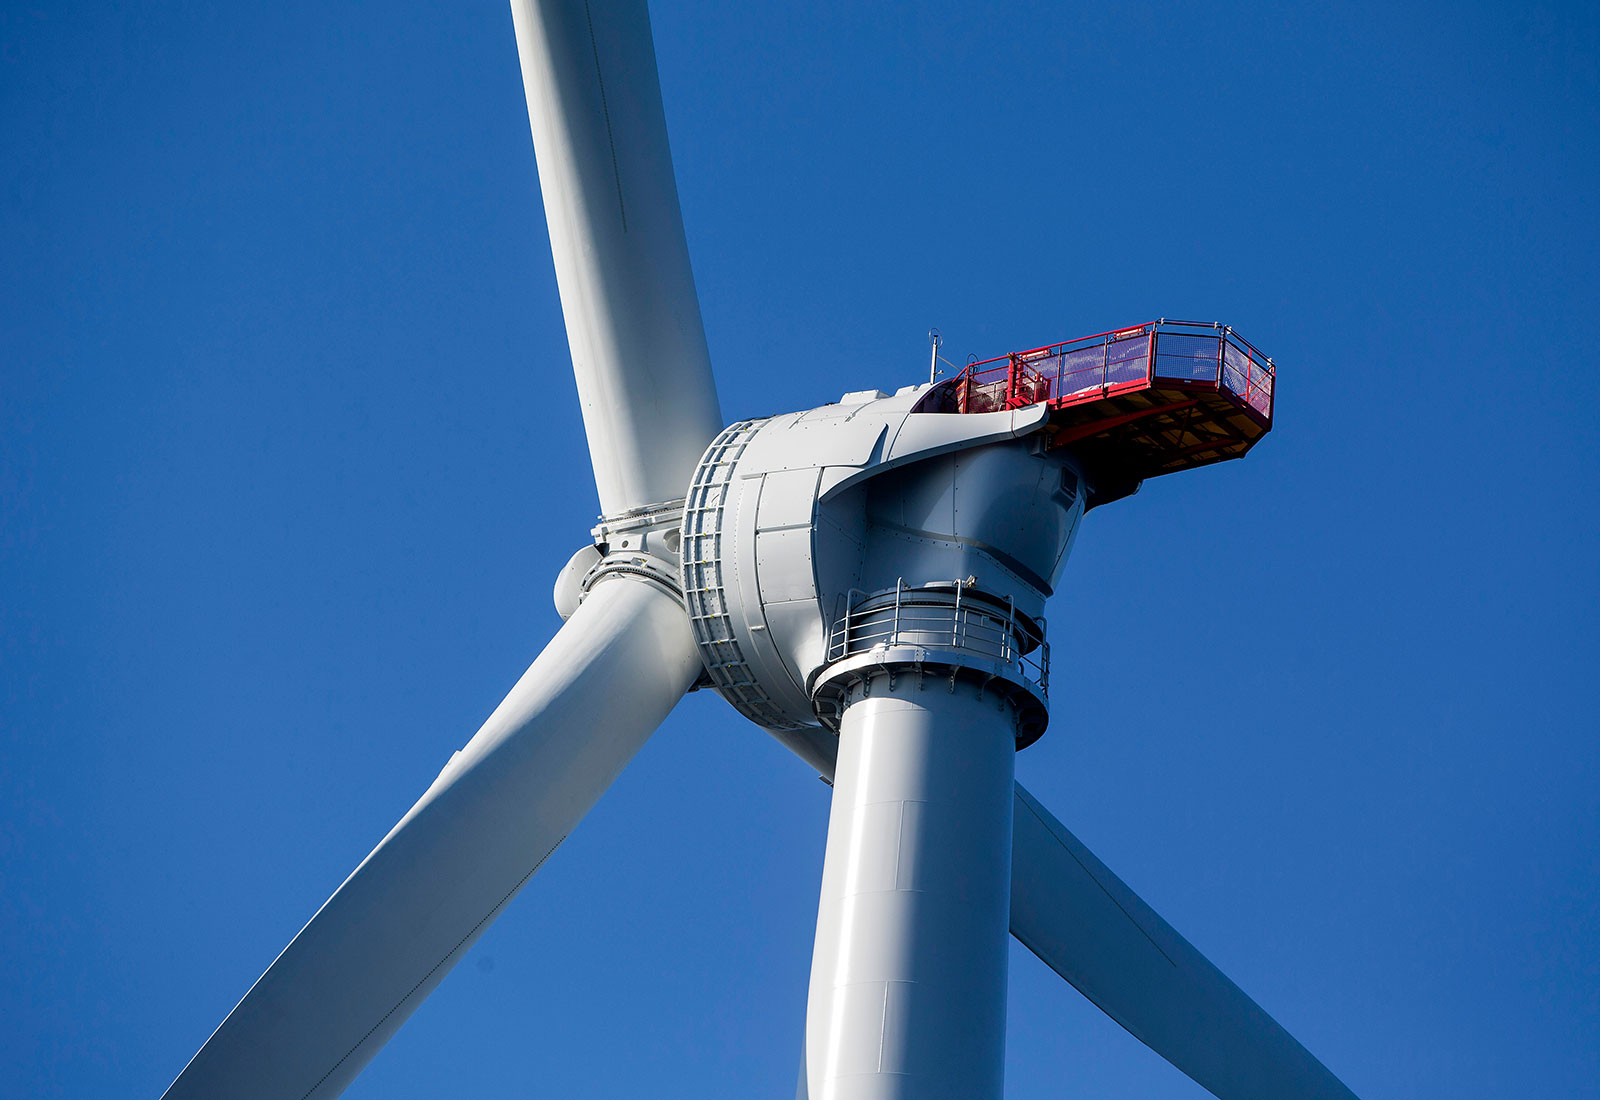 Close-up of wind turbine against blue sky